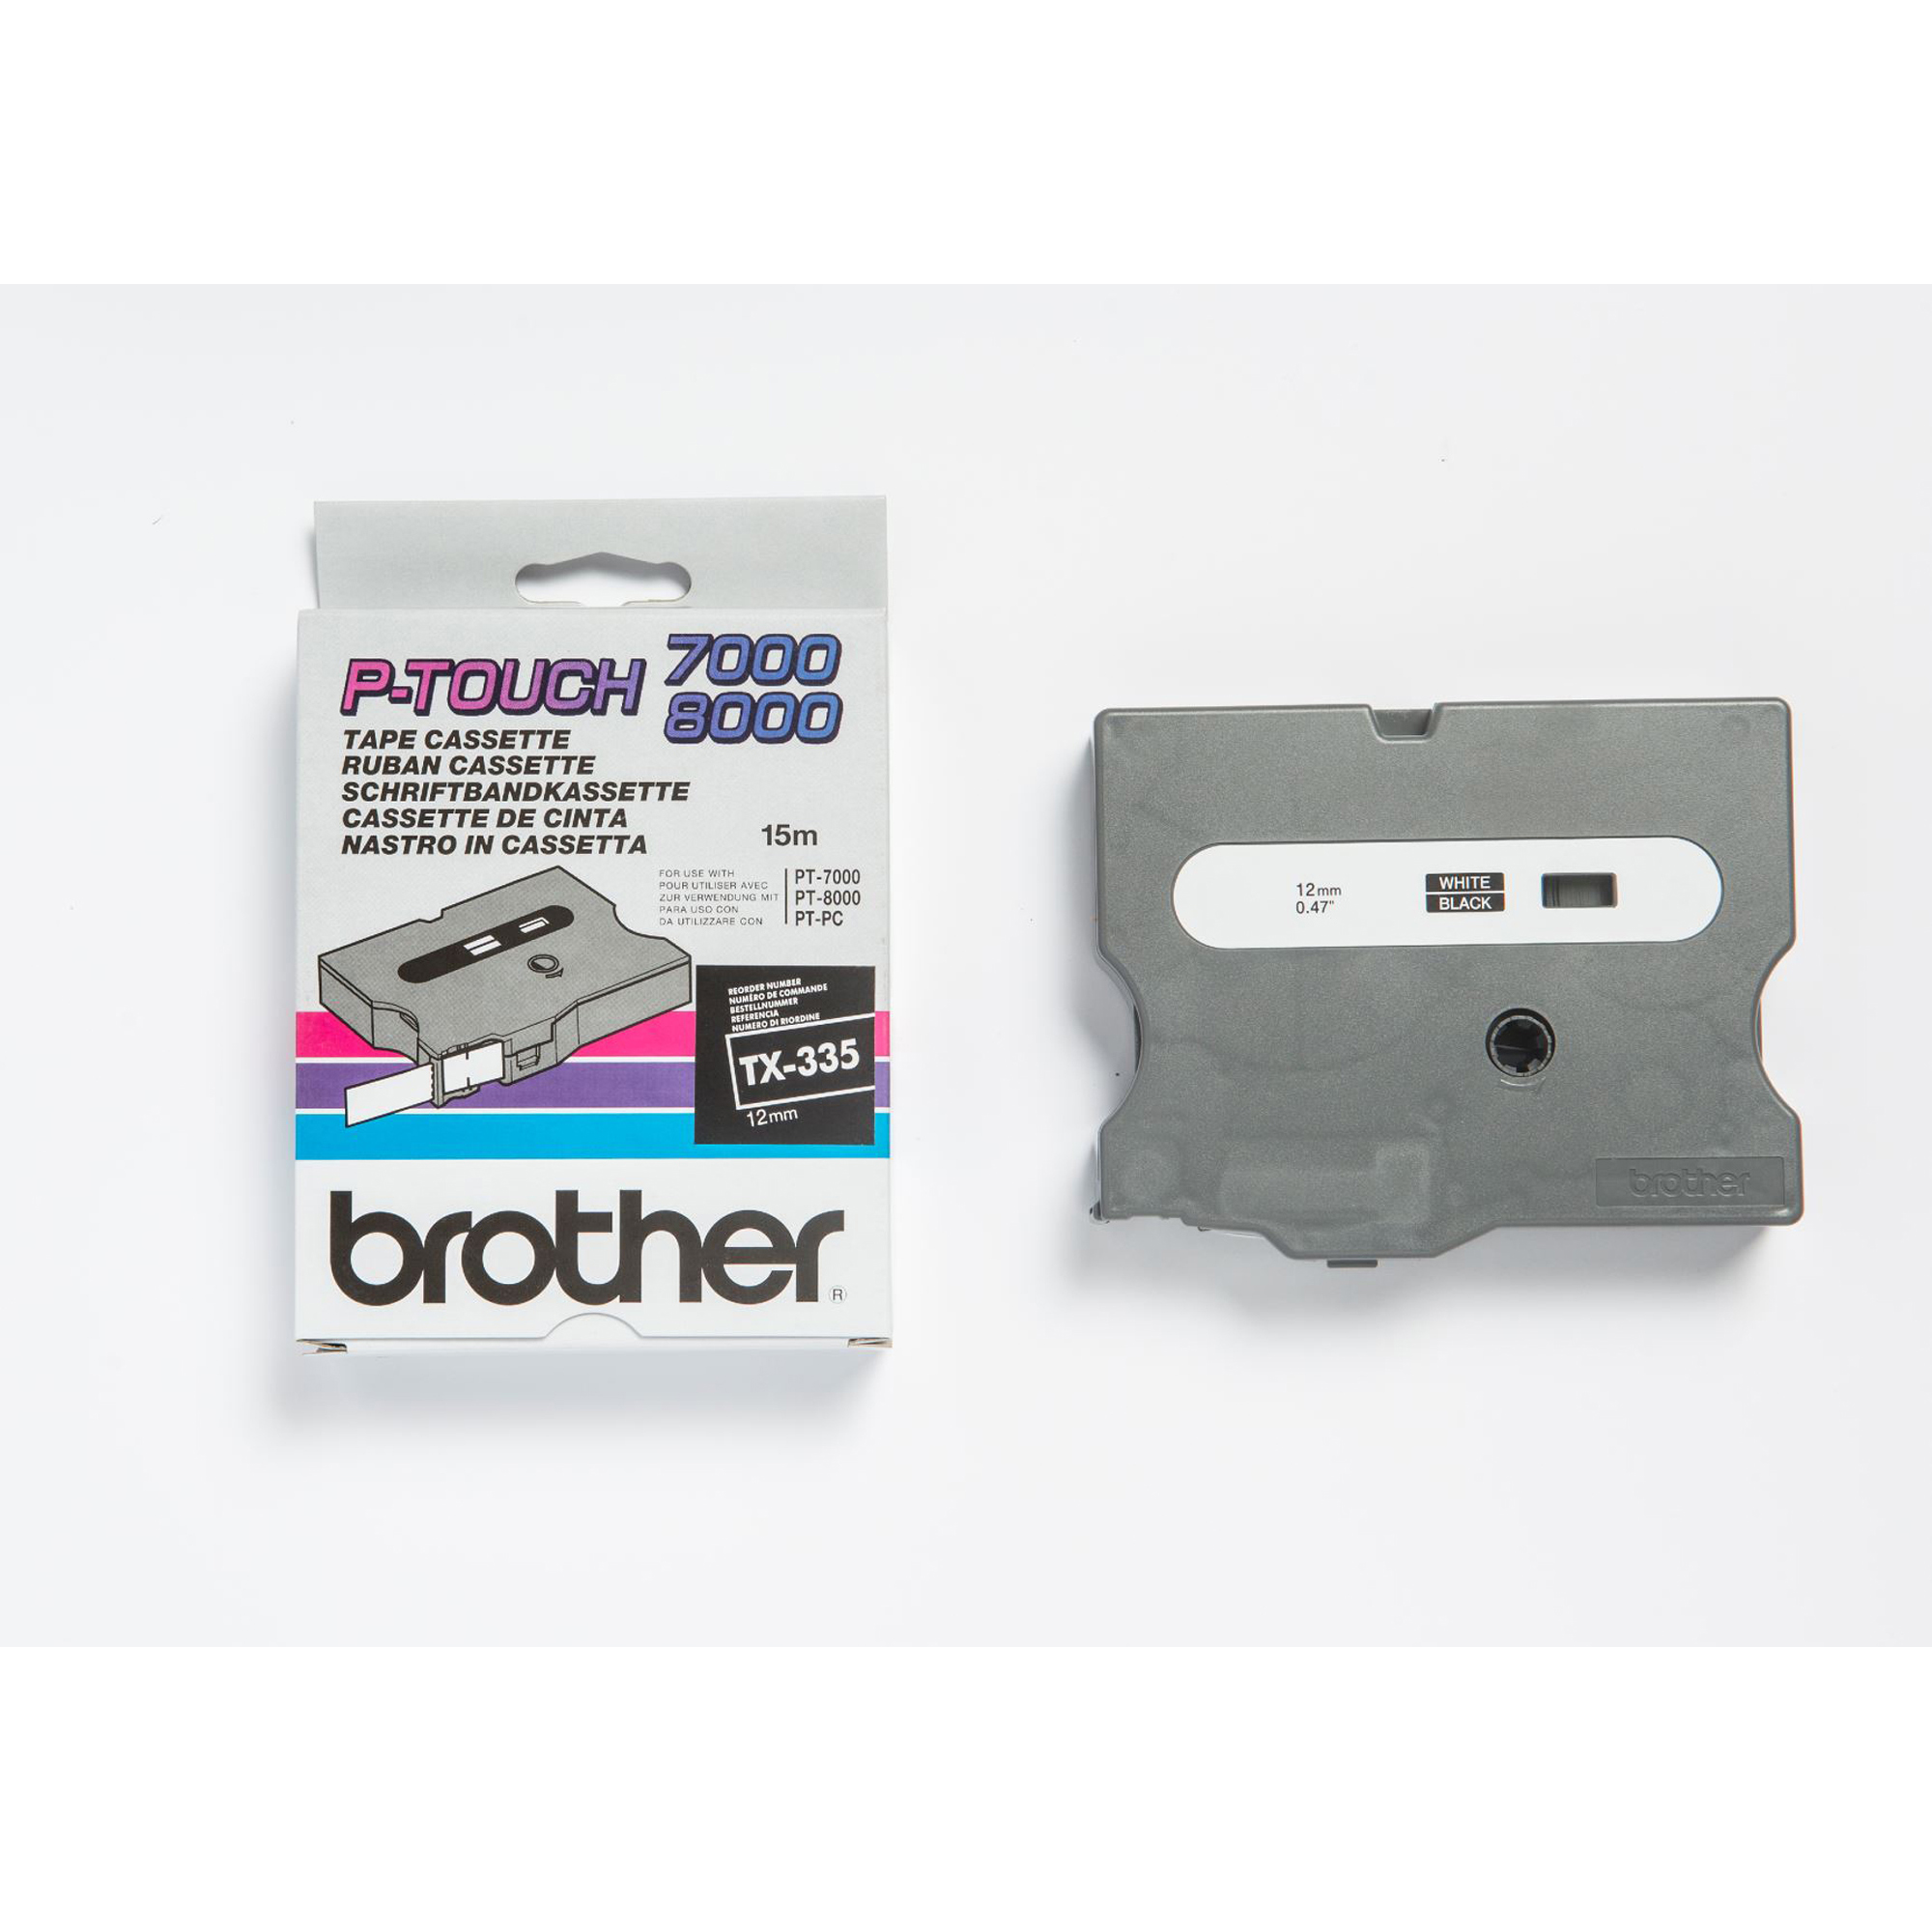 Brother - Nastro -  Nero/Bianco - TX251 - 24mm x7,7mt